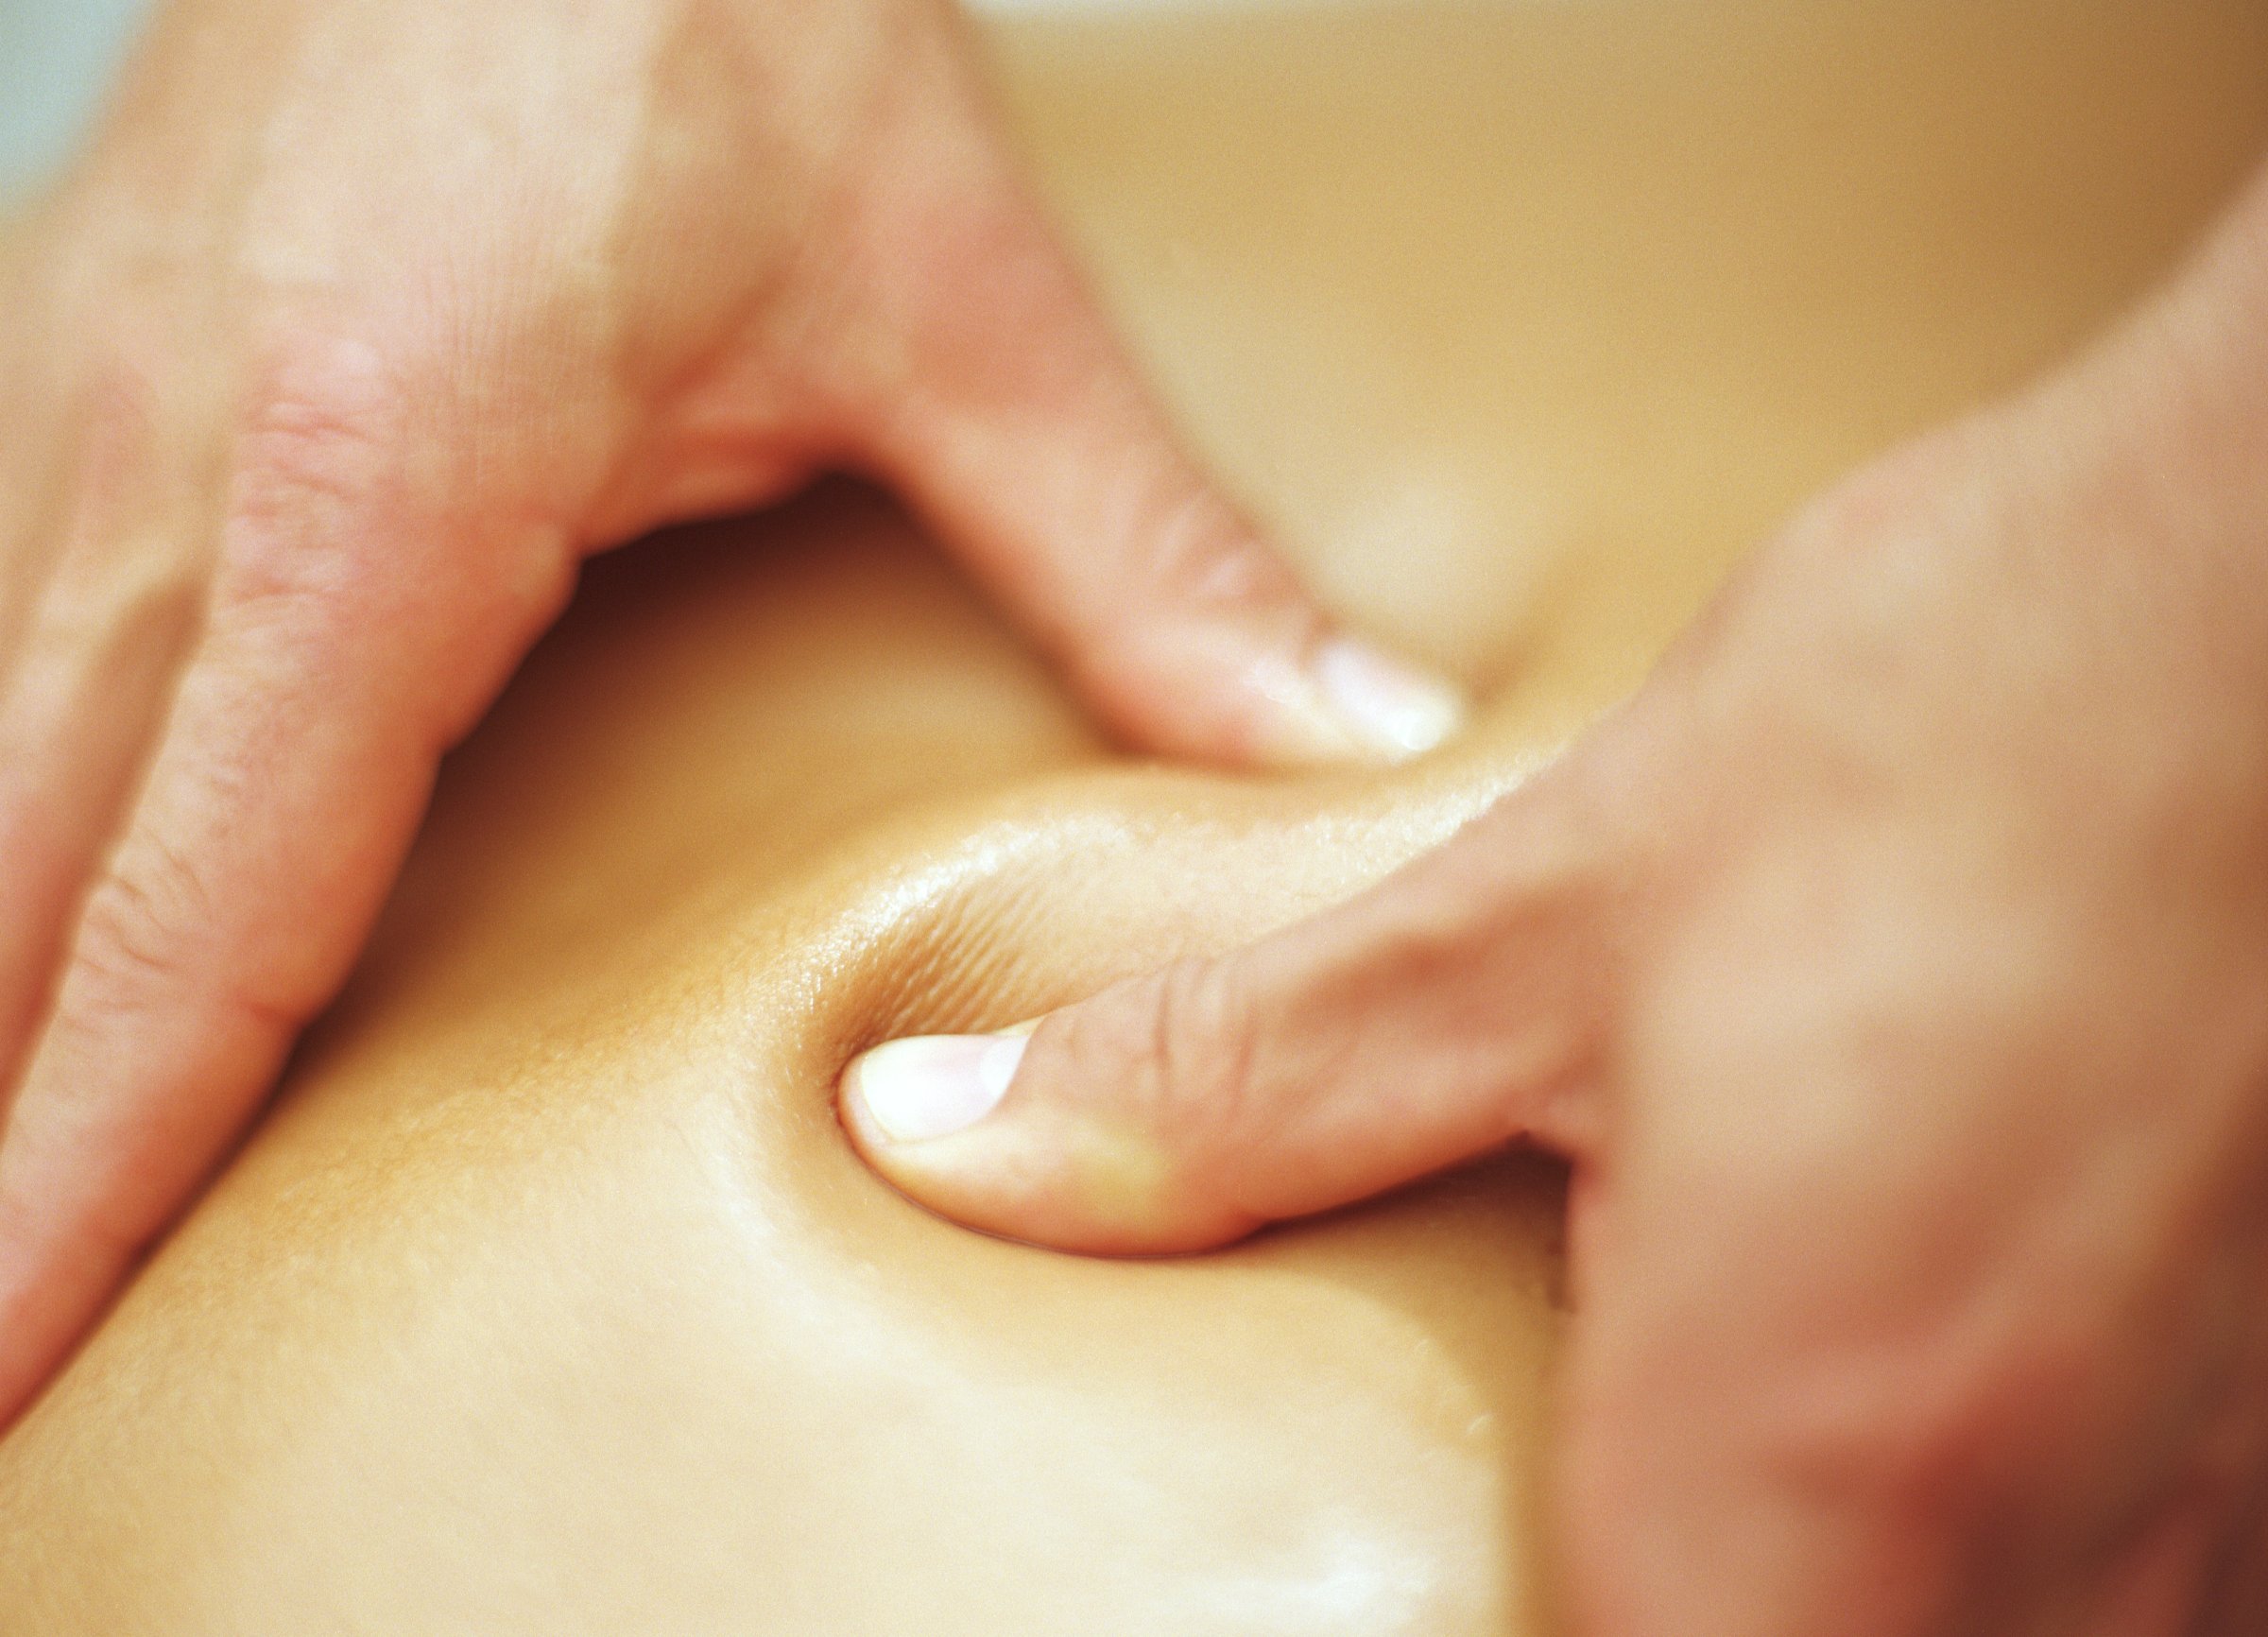 Man massaging woman, pressing thumbs into skin, close-up